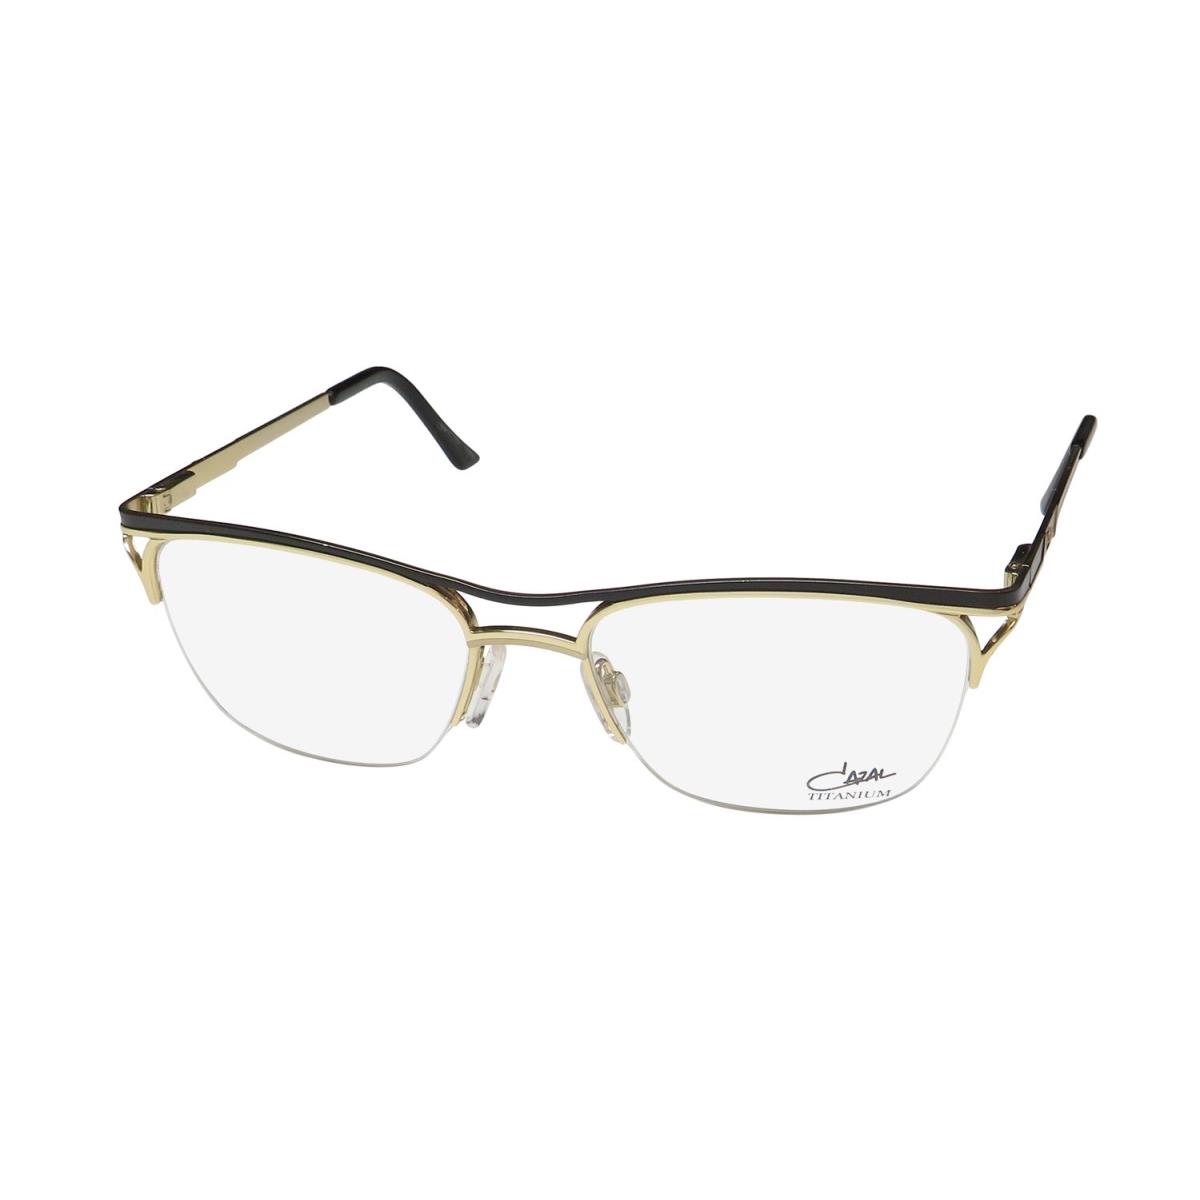 Cazal 4278 Titanium Half-rim Imported From Germany Rare Eyeglass Frame/glasses Black / Gold